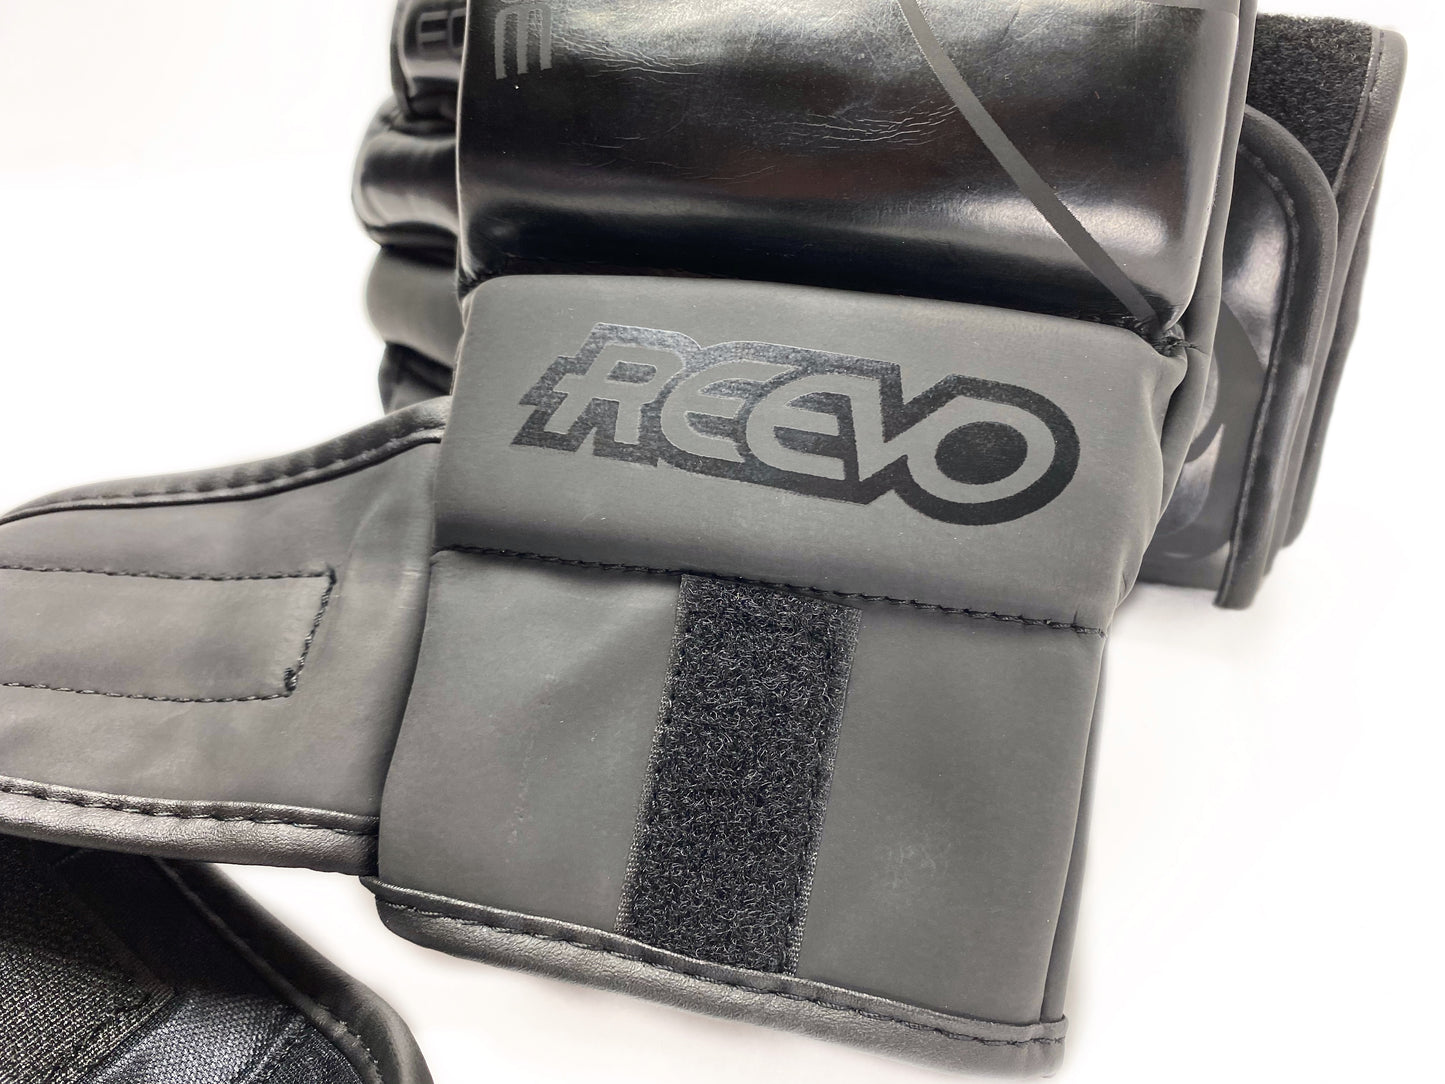 Reevo Eclipse MMA Glove